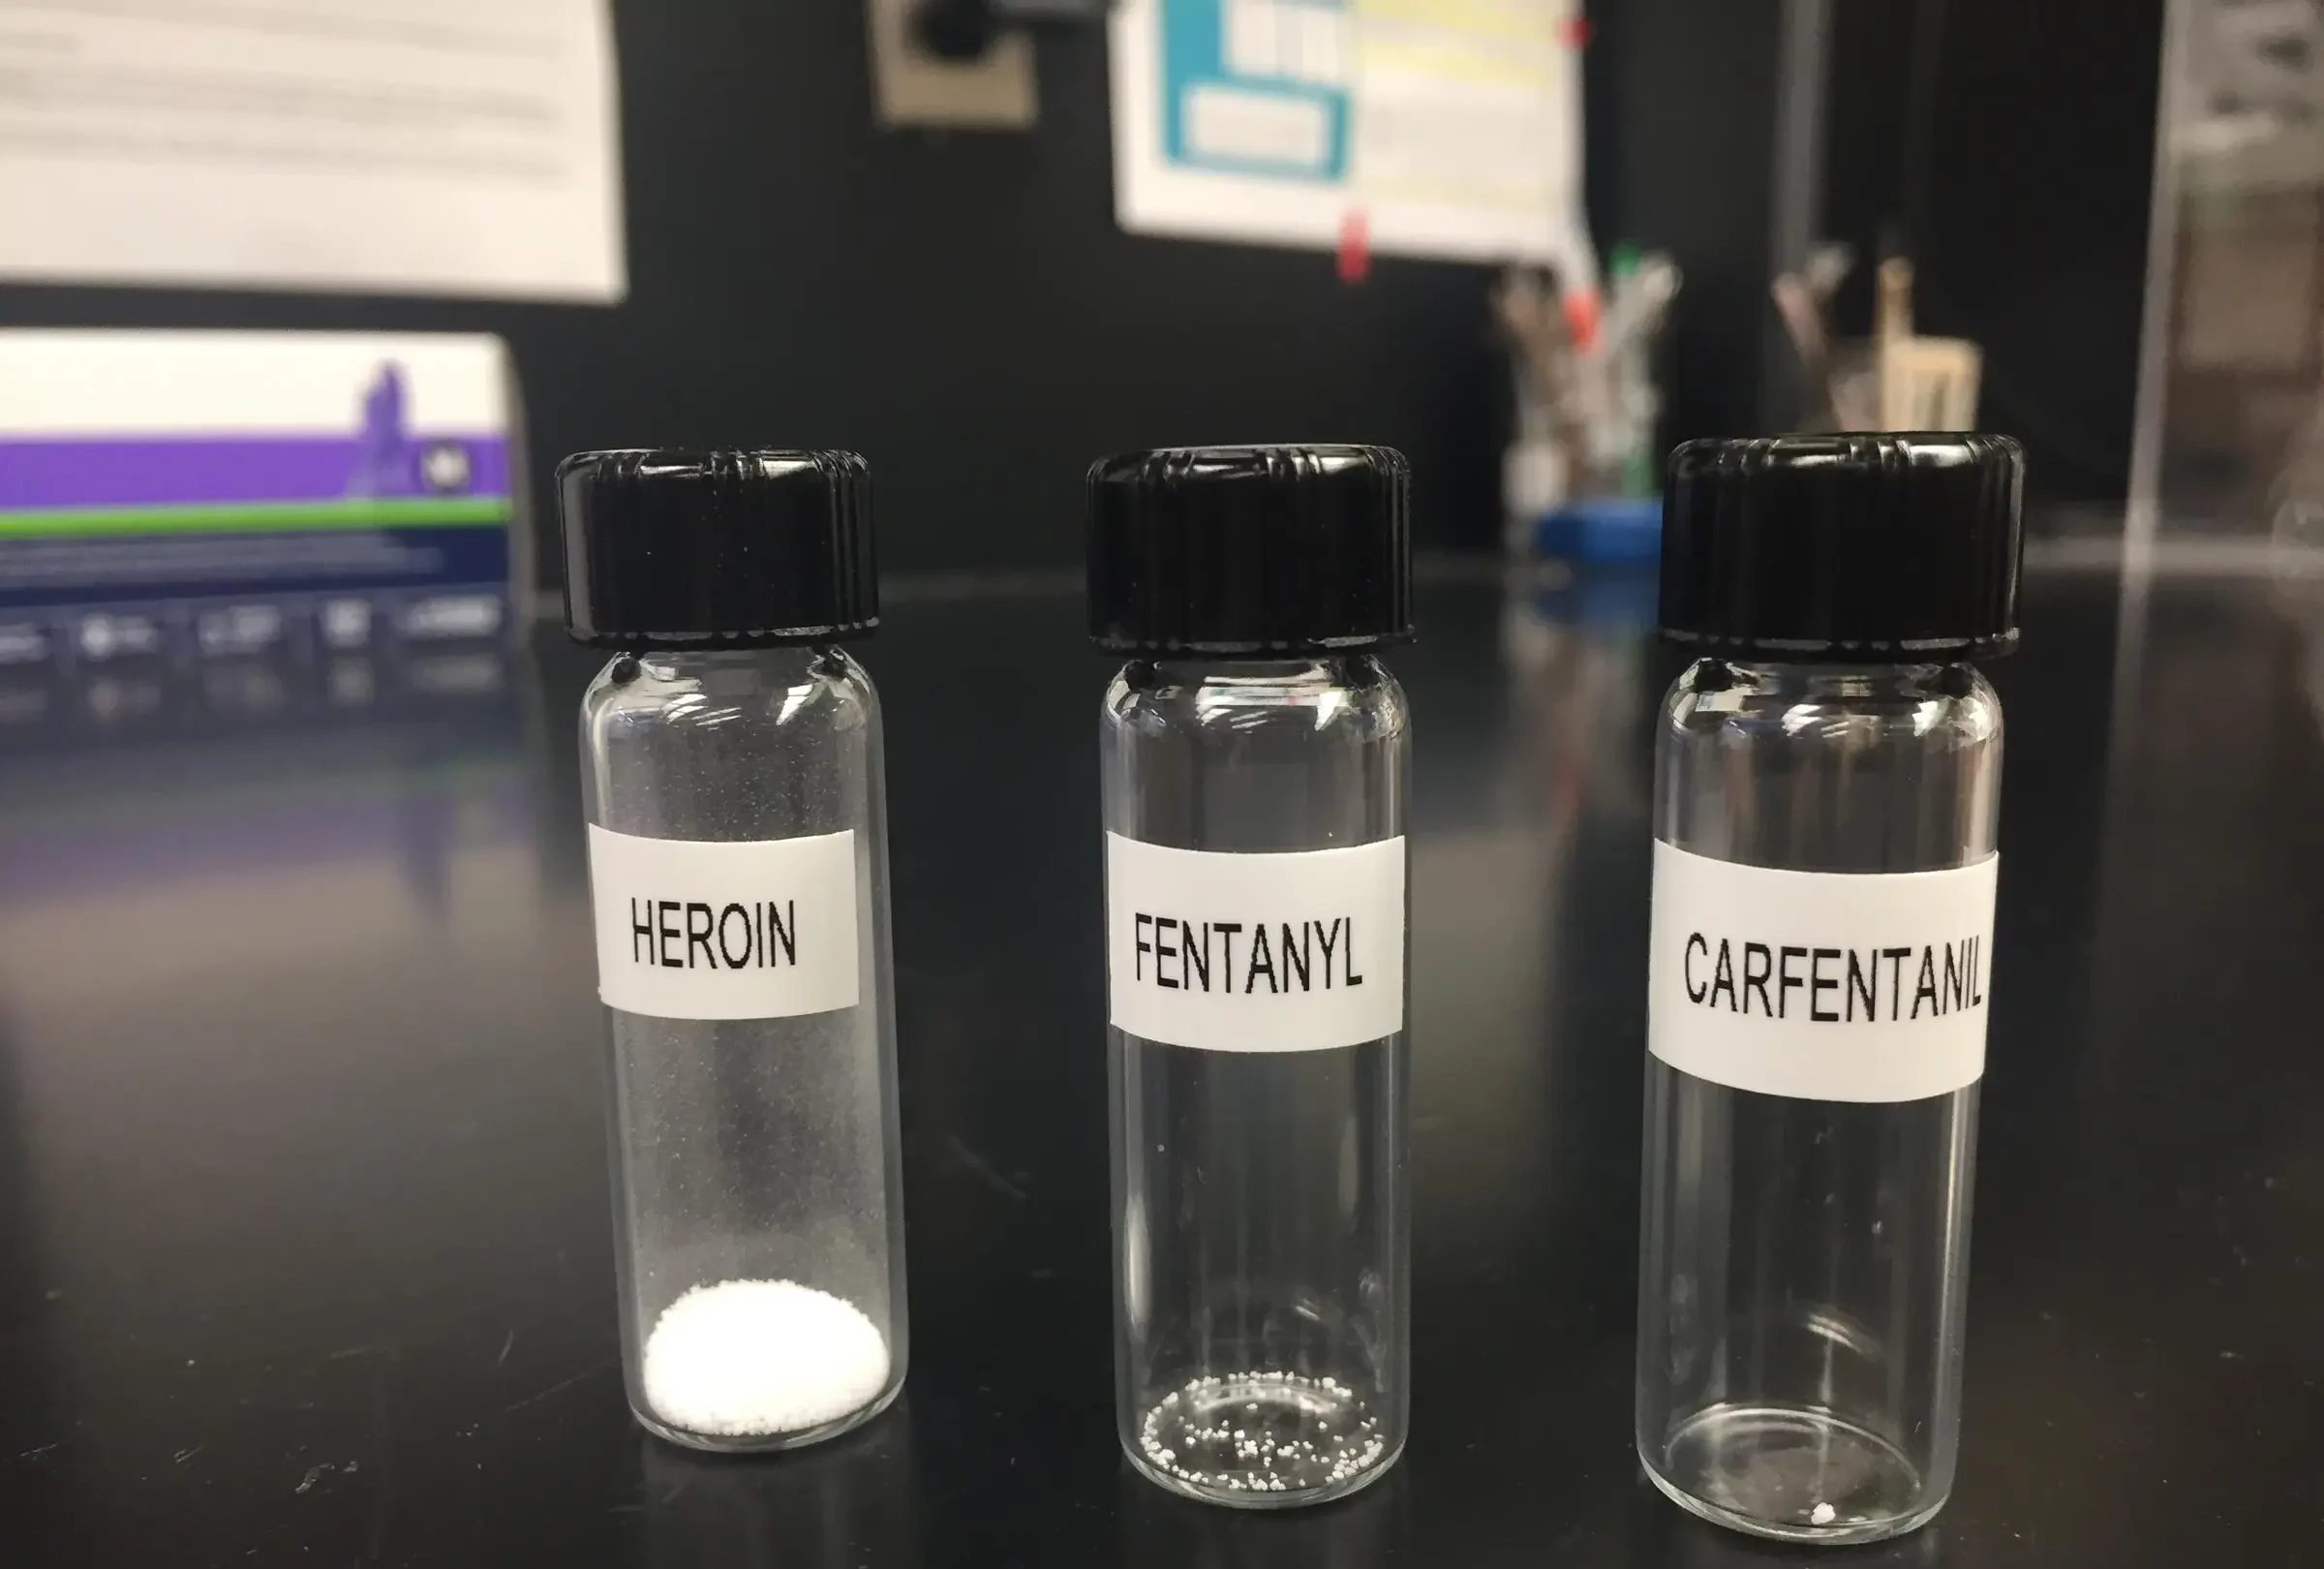 carfentanil, fentanyl, and heroin